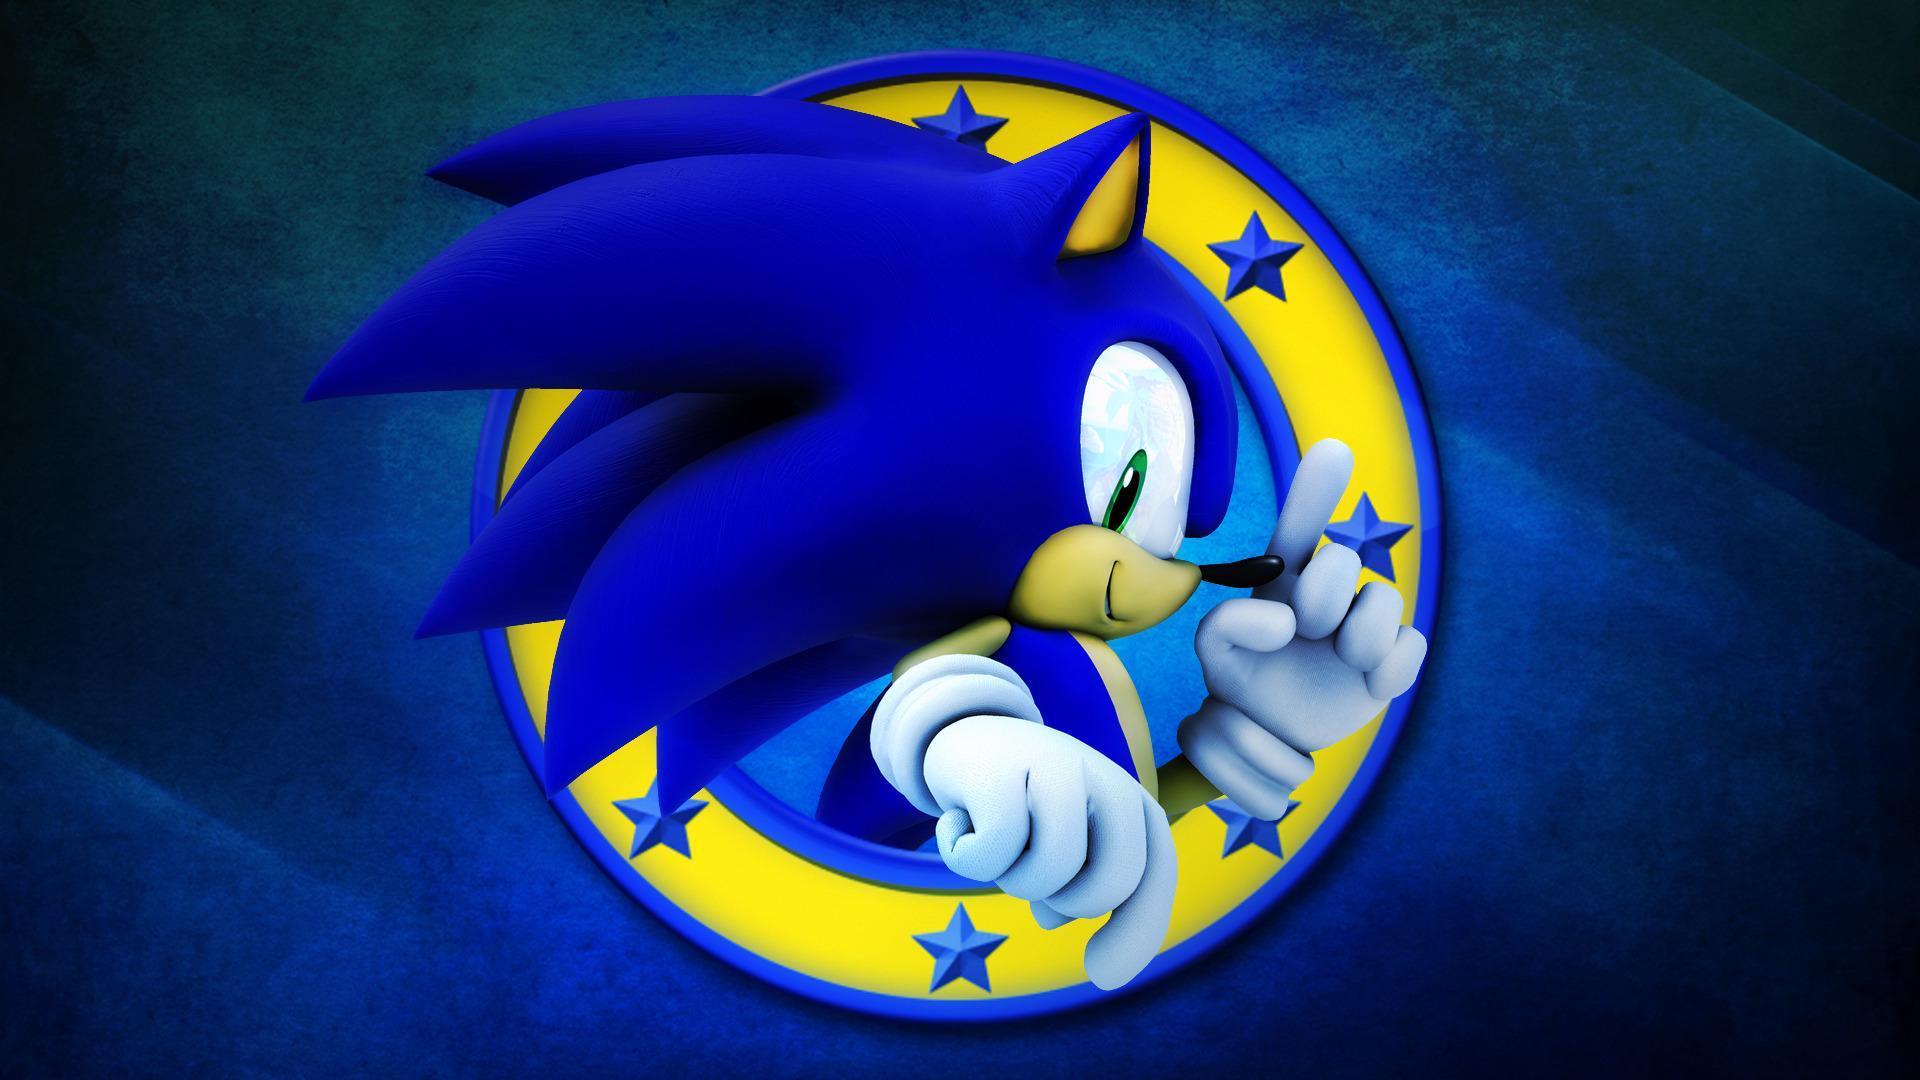 Sonic HD Wallpaper